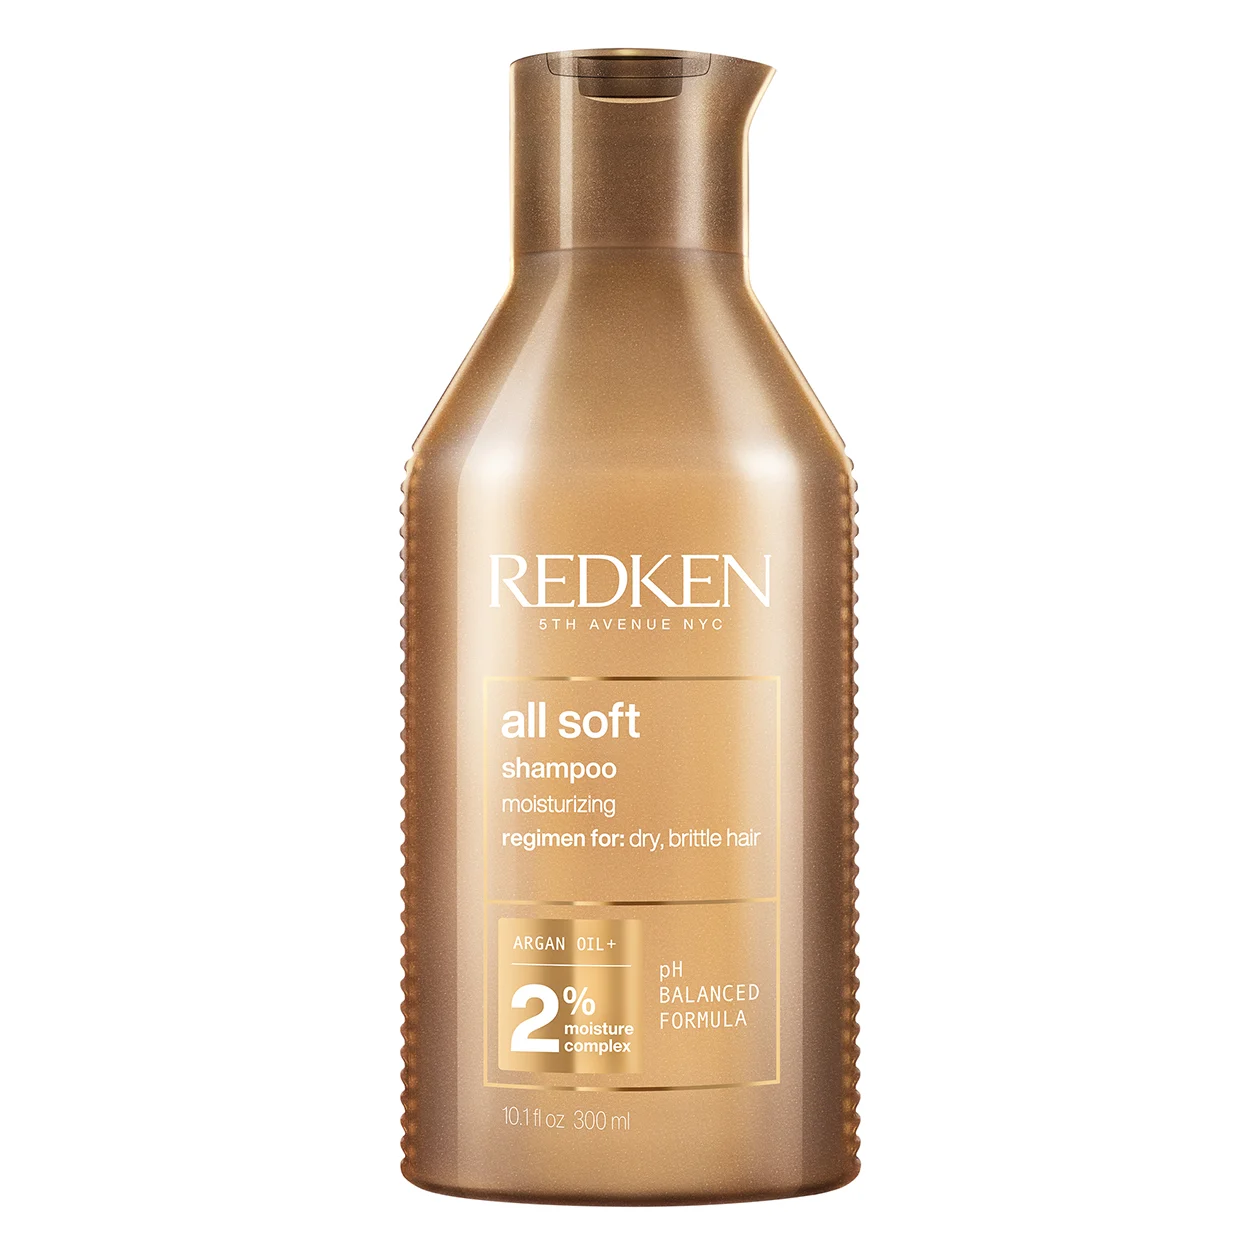 A tied FEMMENORDIC's choice in the Redken vs Aveda shampoo comparison, Redken All Soft Shampoo